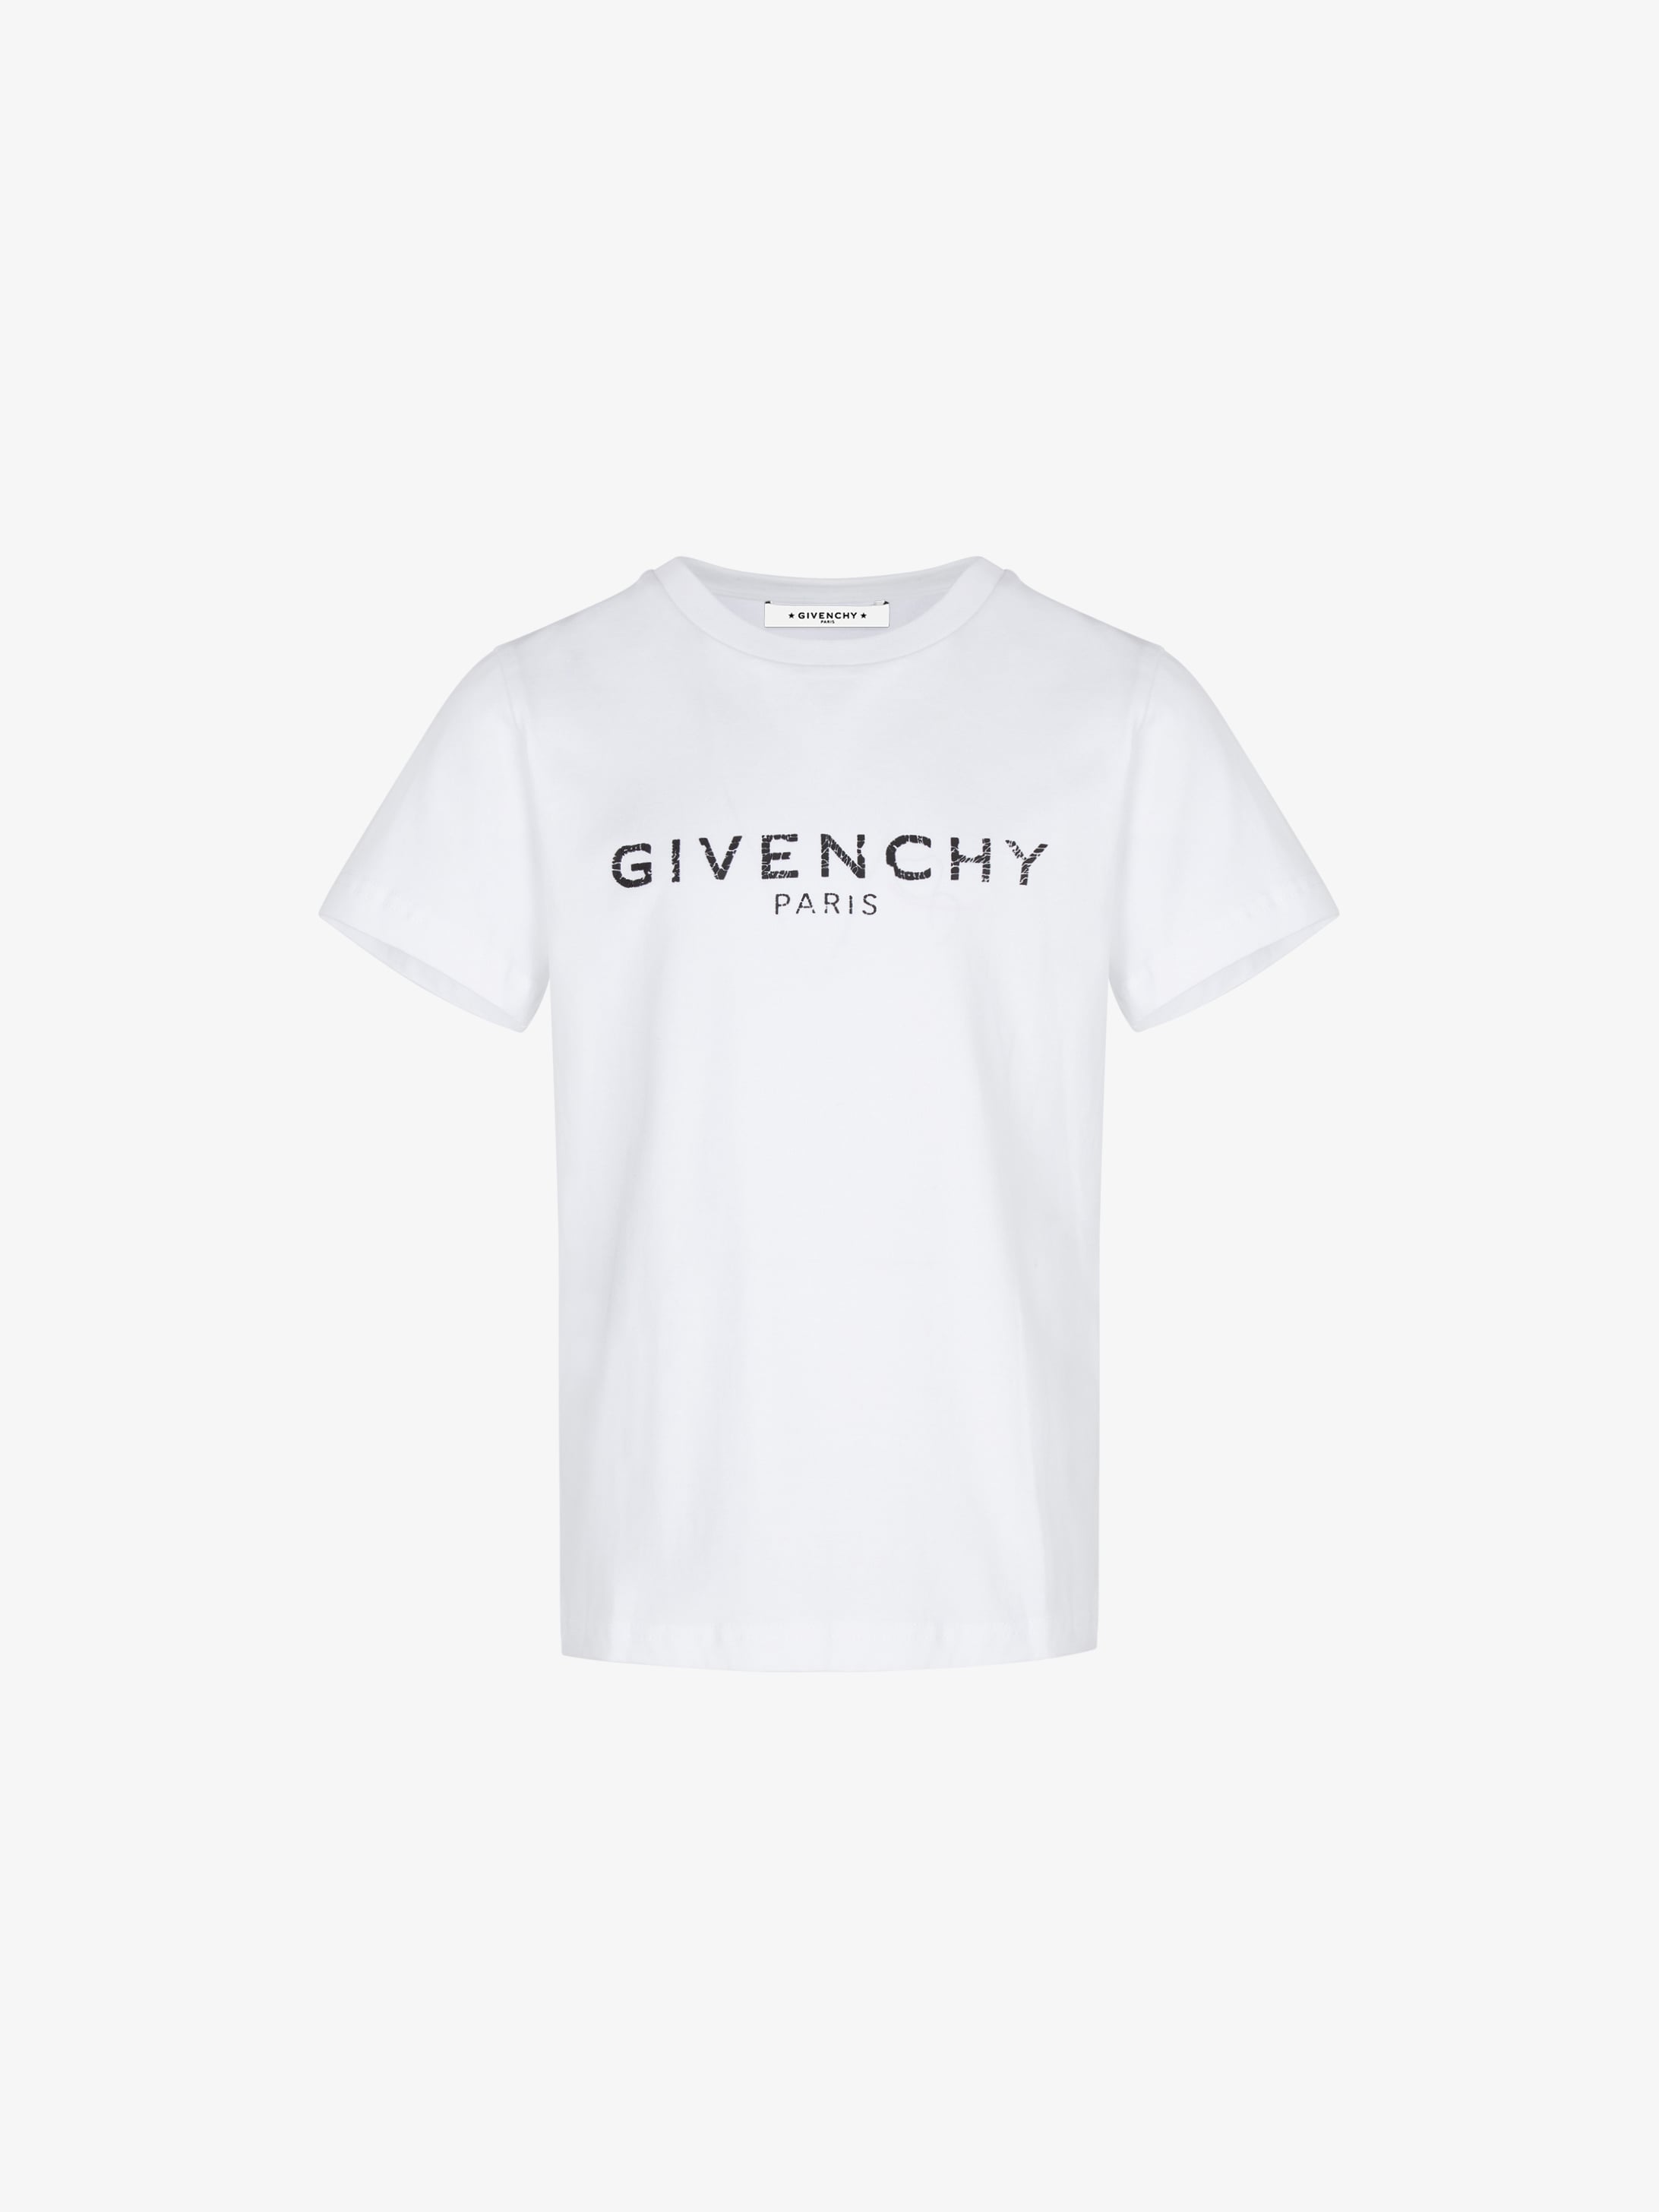 givenchy white t shirt